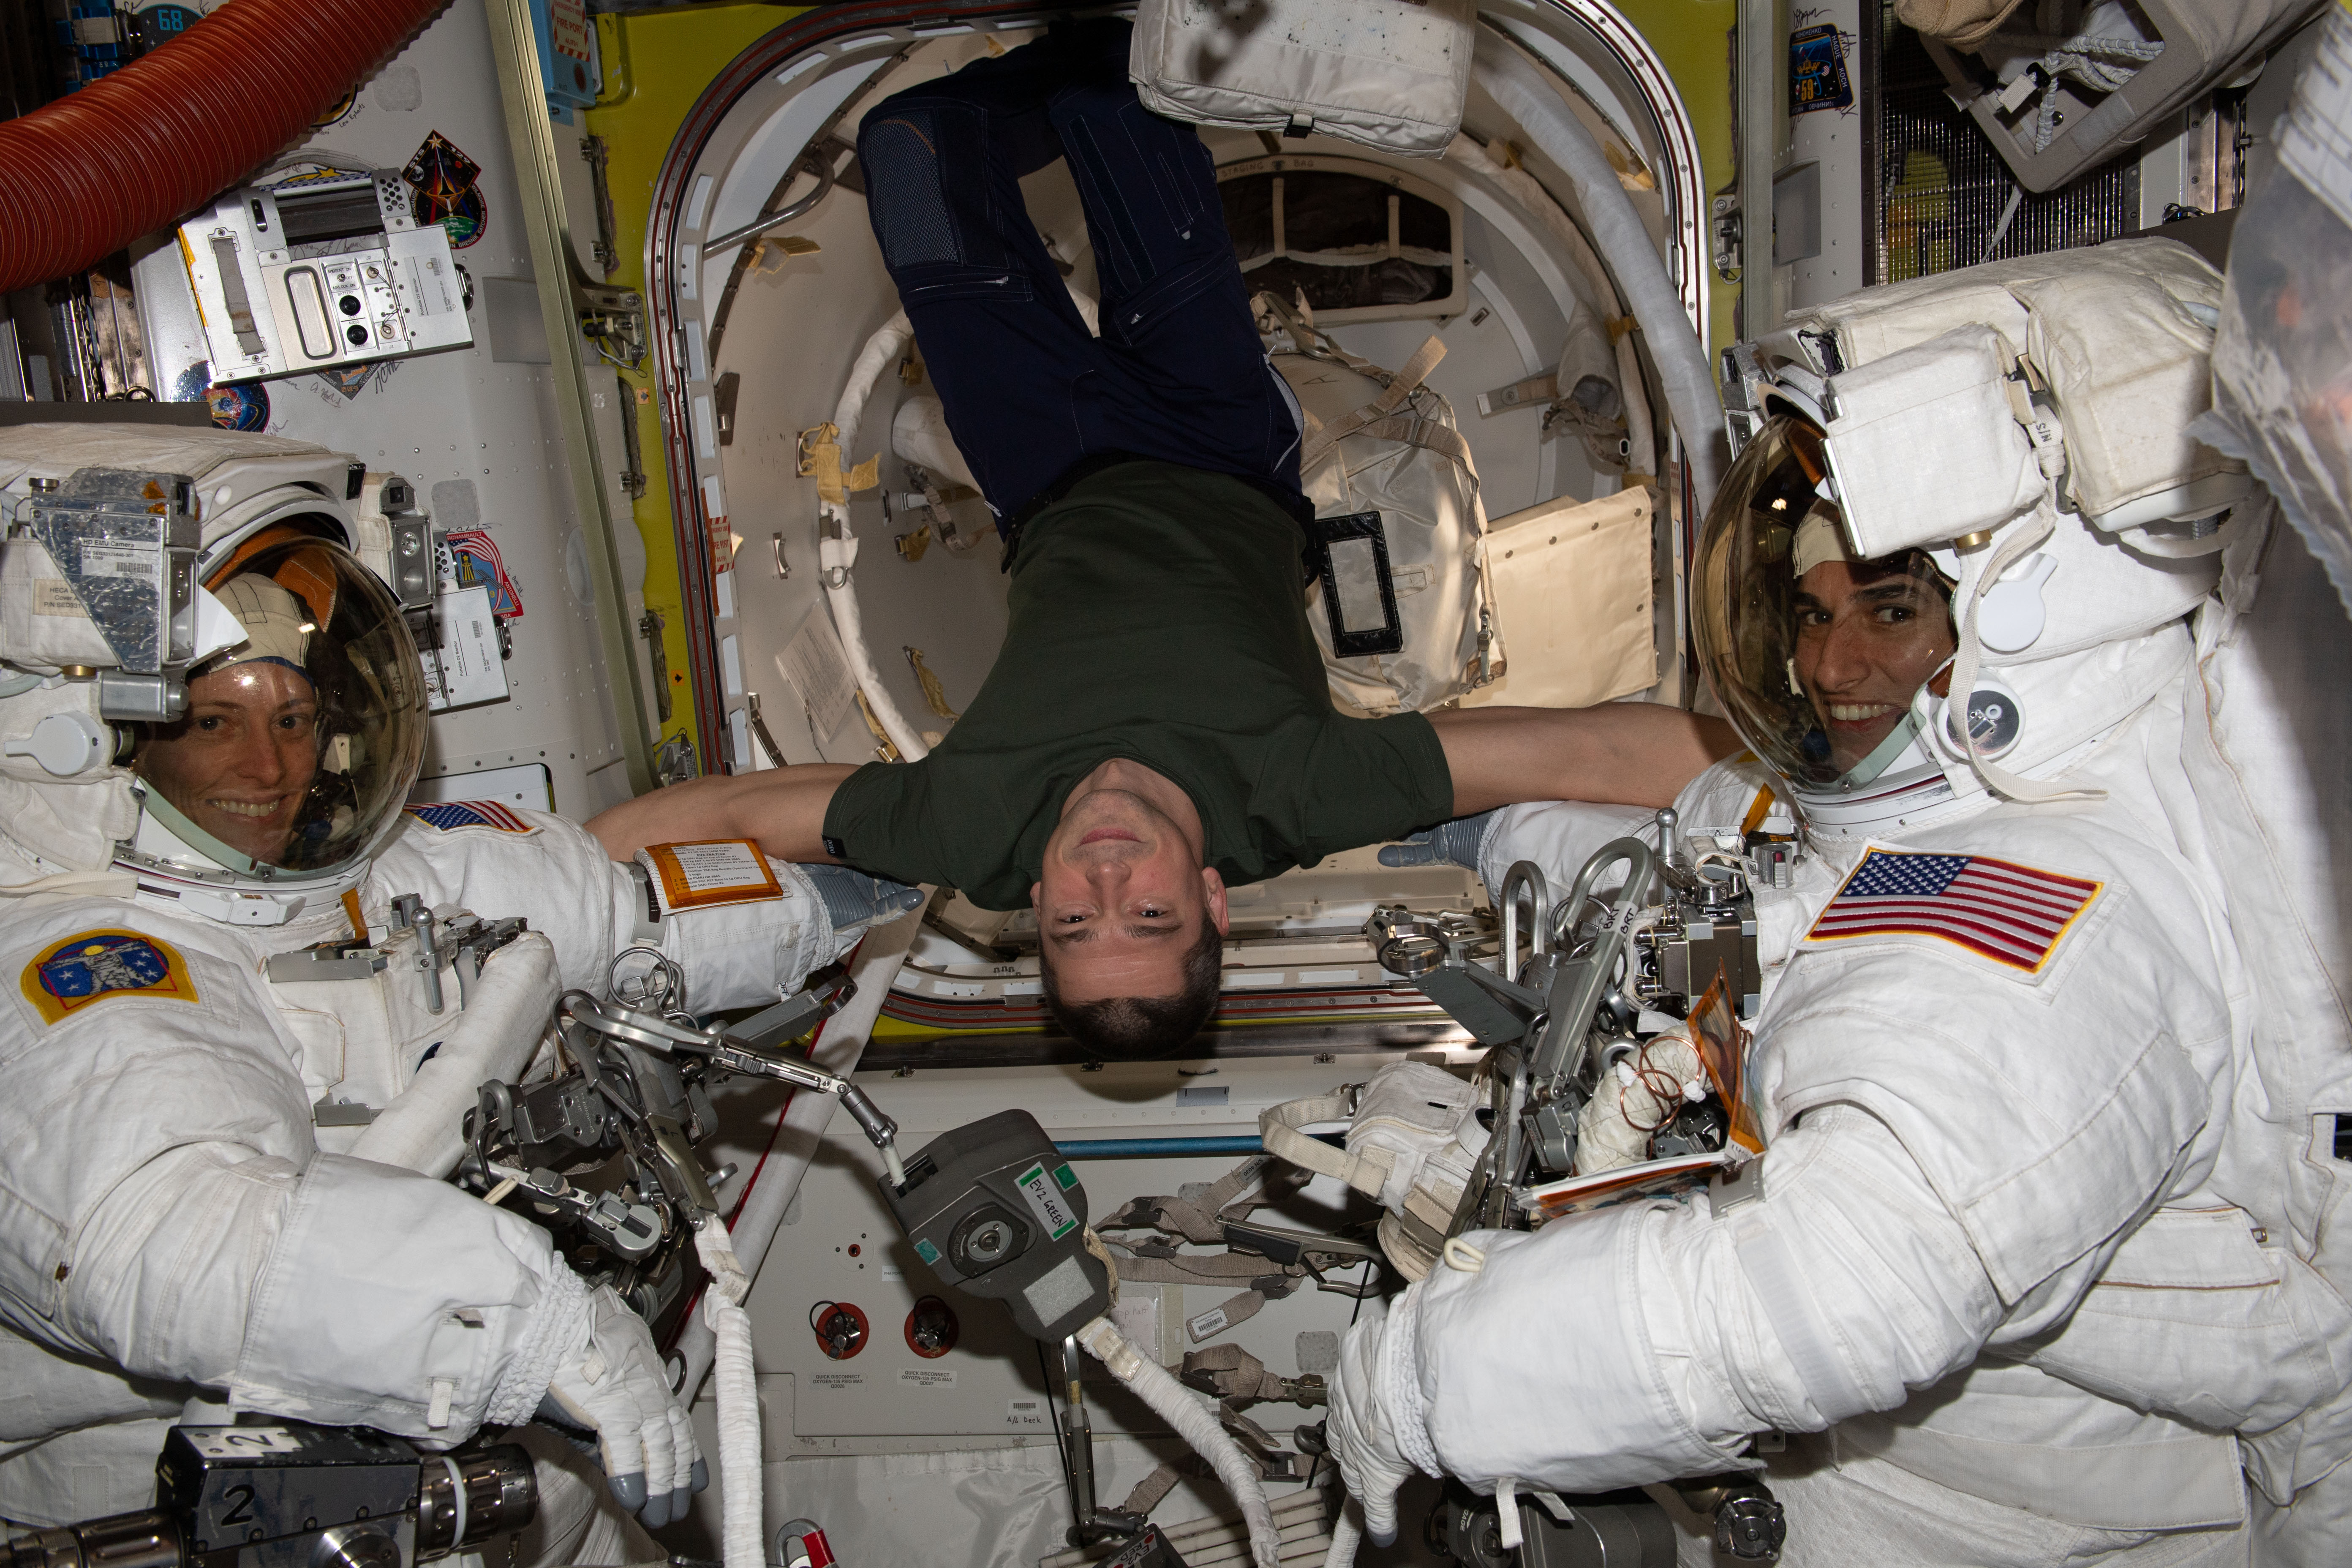 O’Hara, left, and Moghbeli, right, prepare for their spacewalk as Roscosmos cosmonaut Nikolai A. Chub assists.